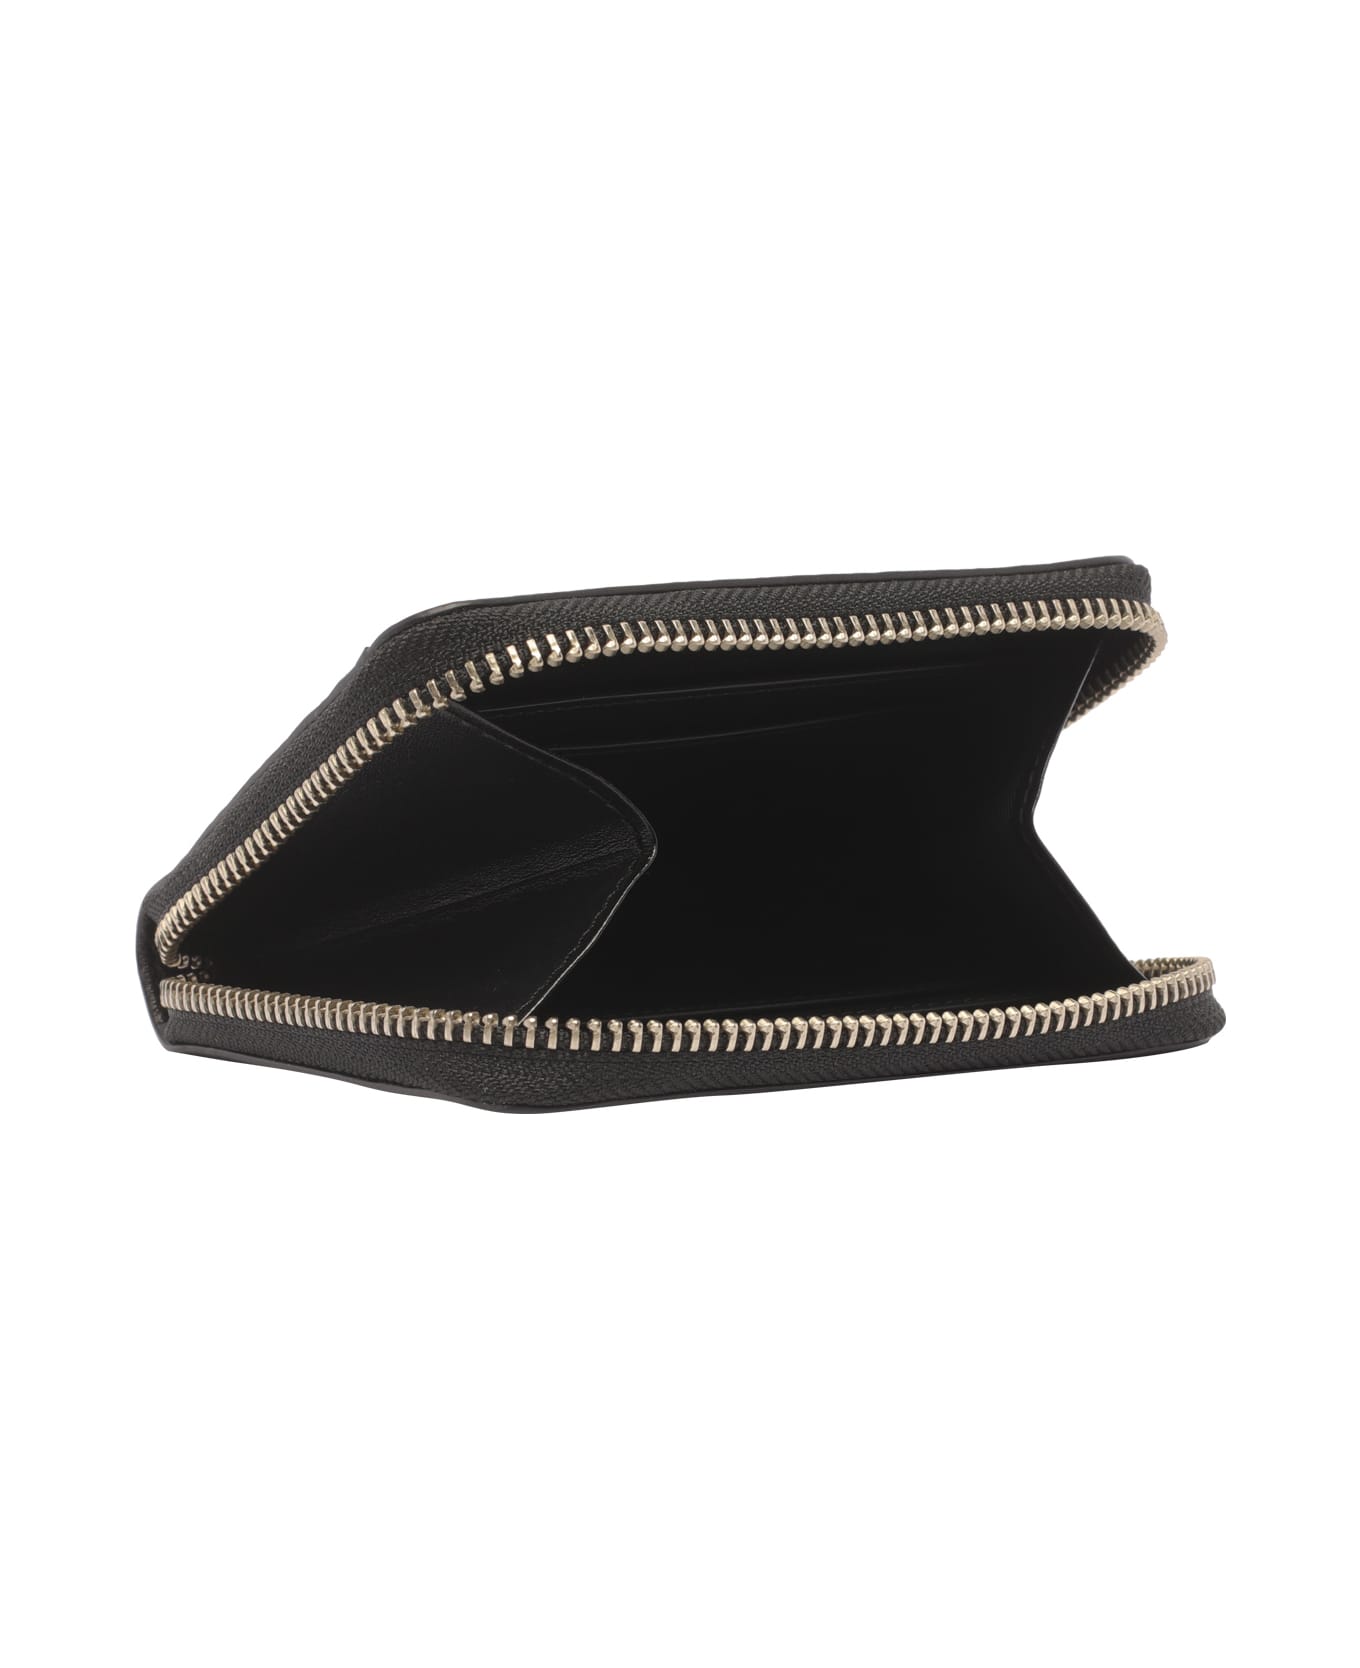 Marc Jacobs The Monogram Leather Zip Around Wallet - Black White 財布